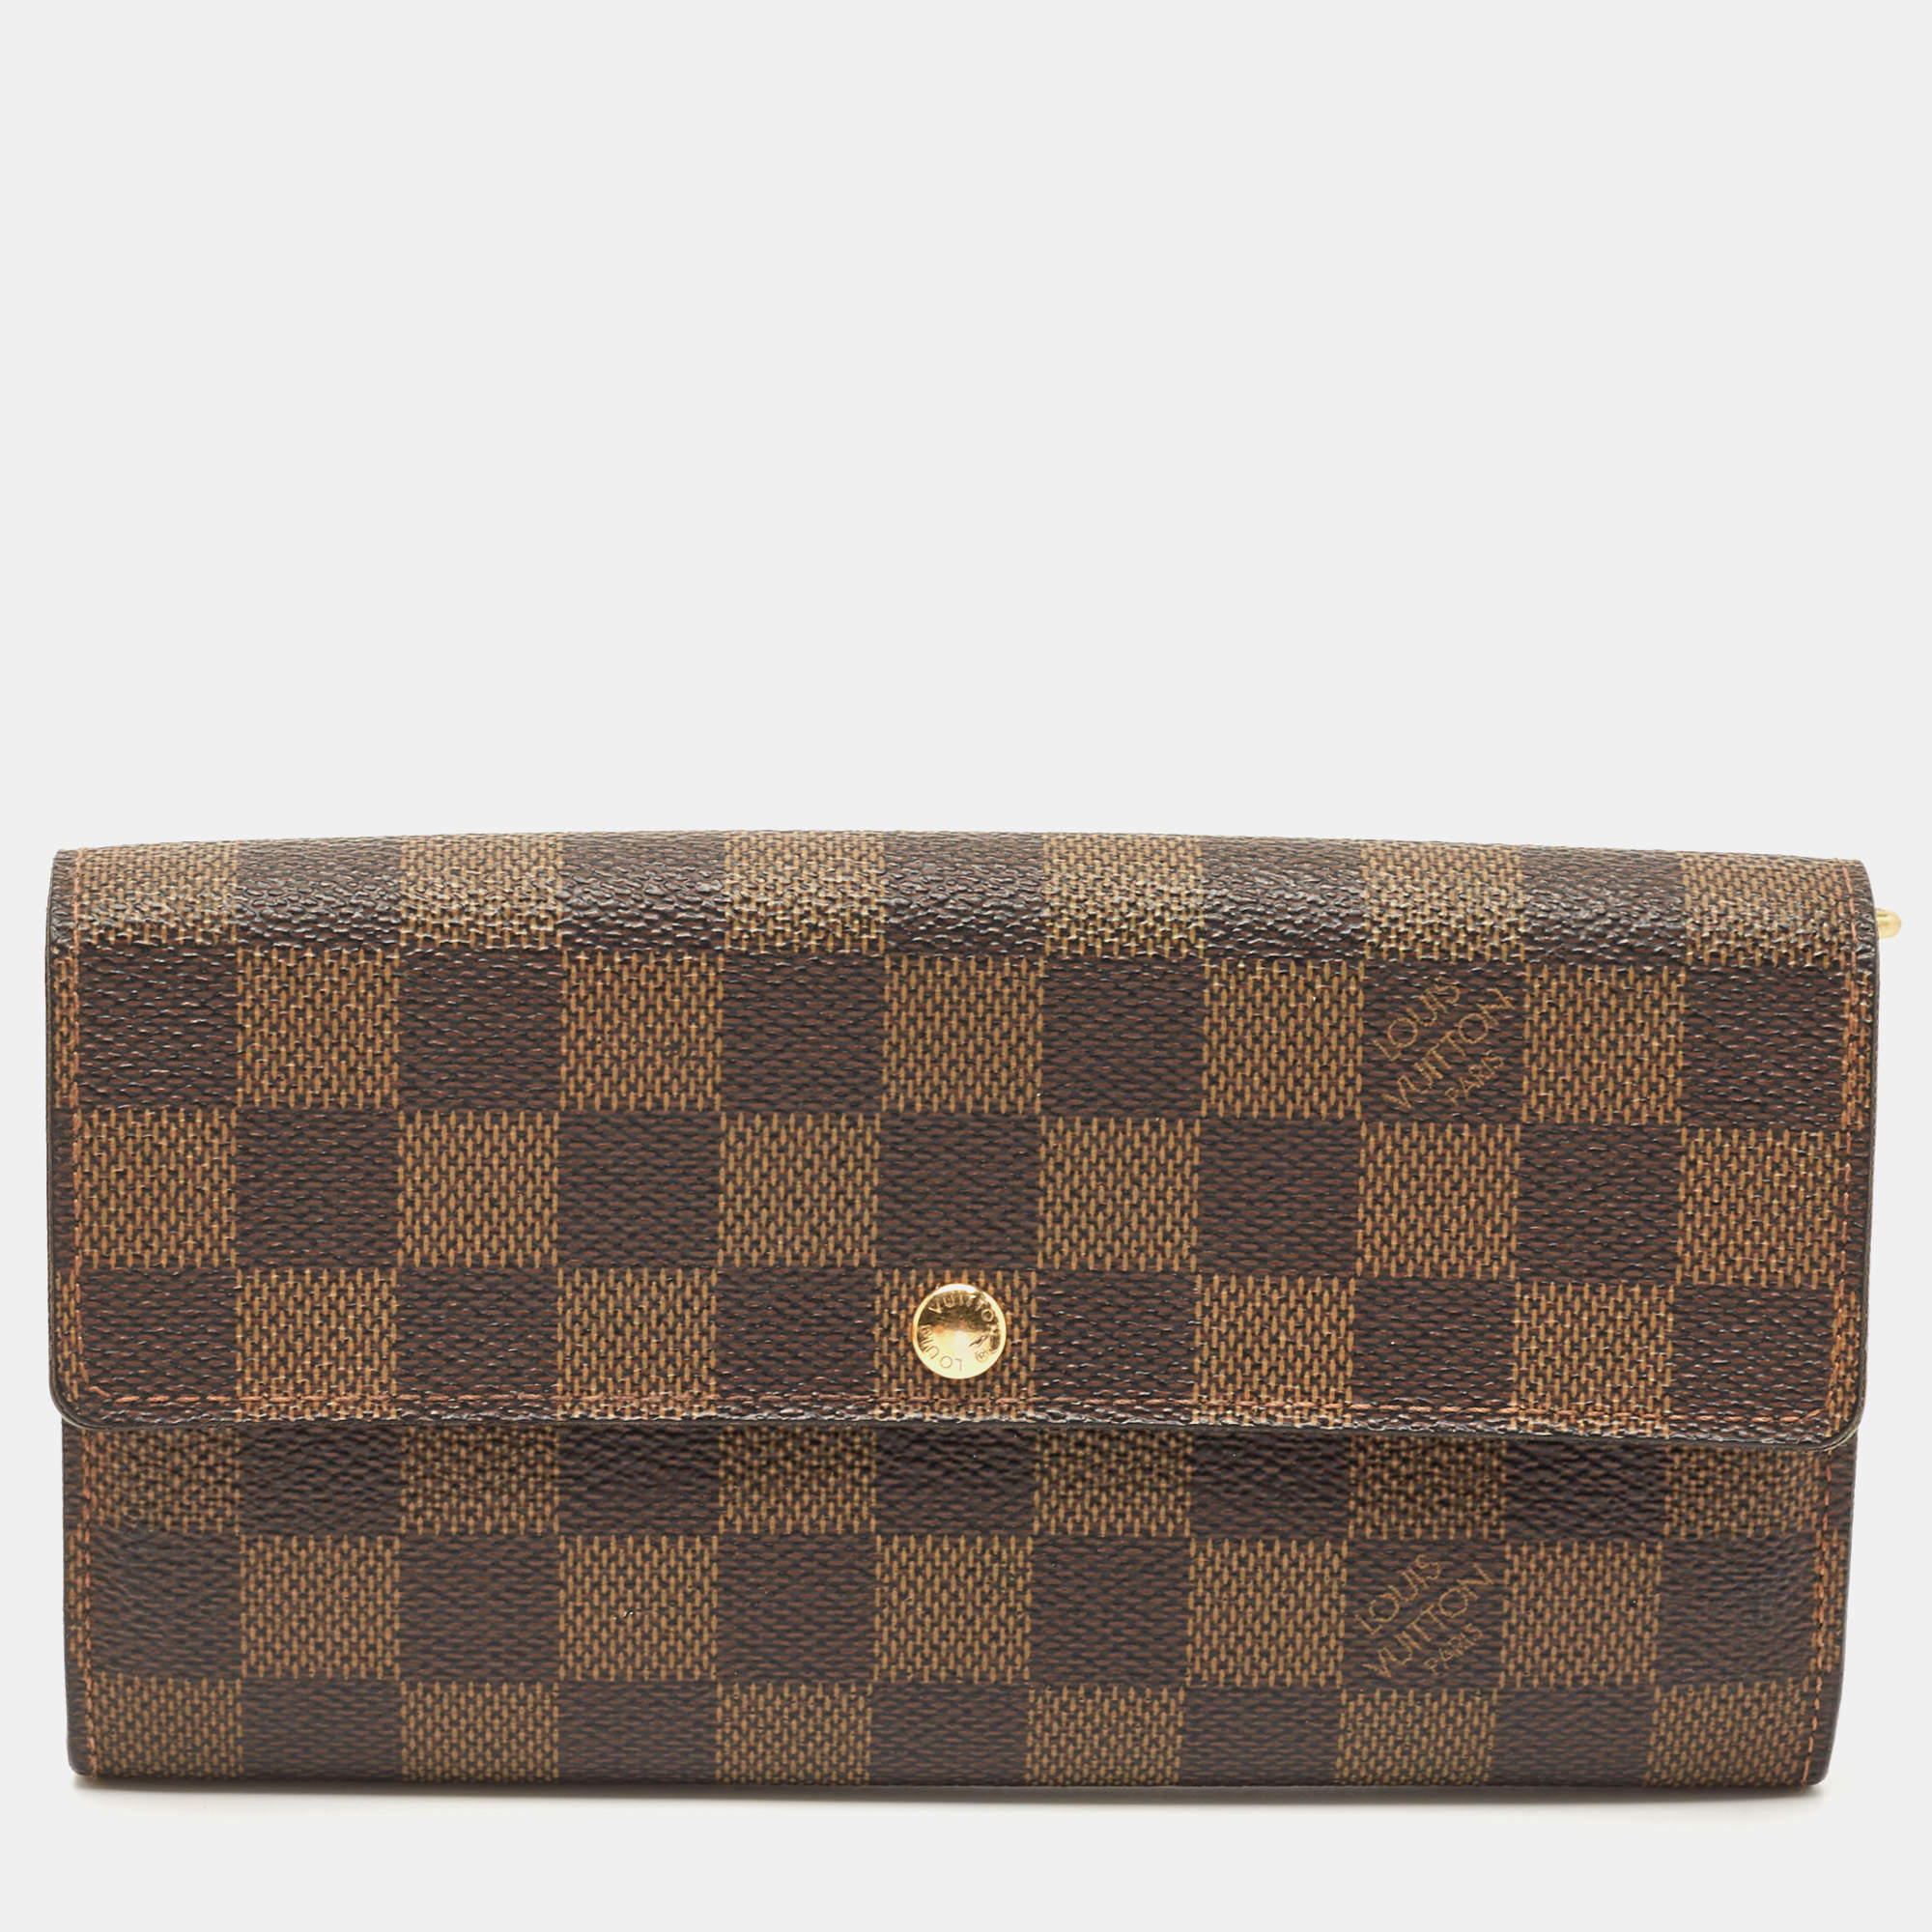 Authentic Louis Vuitton Damier Ebene Compact Zip Bifold Wallet